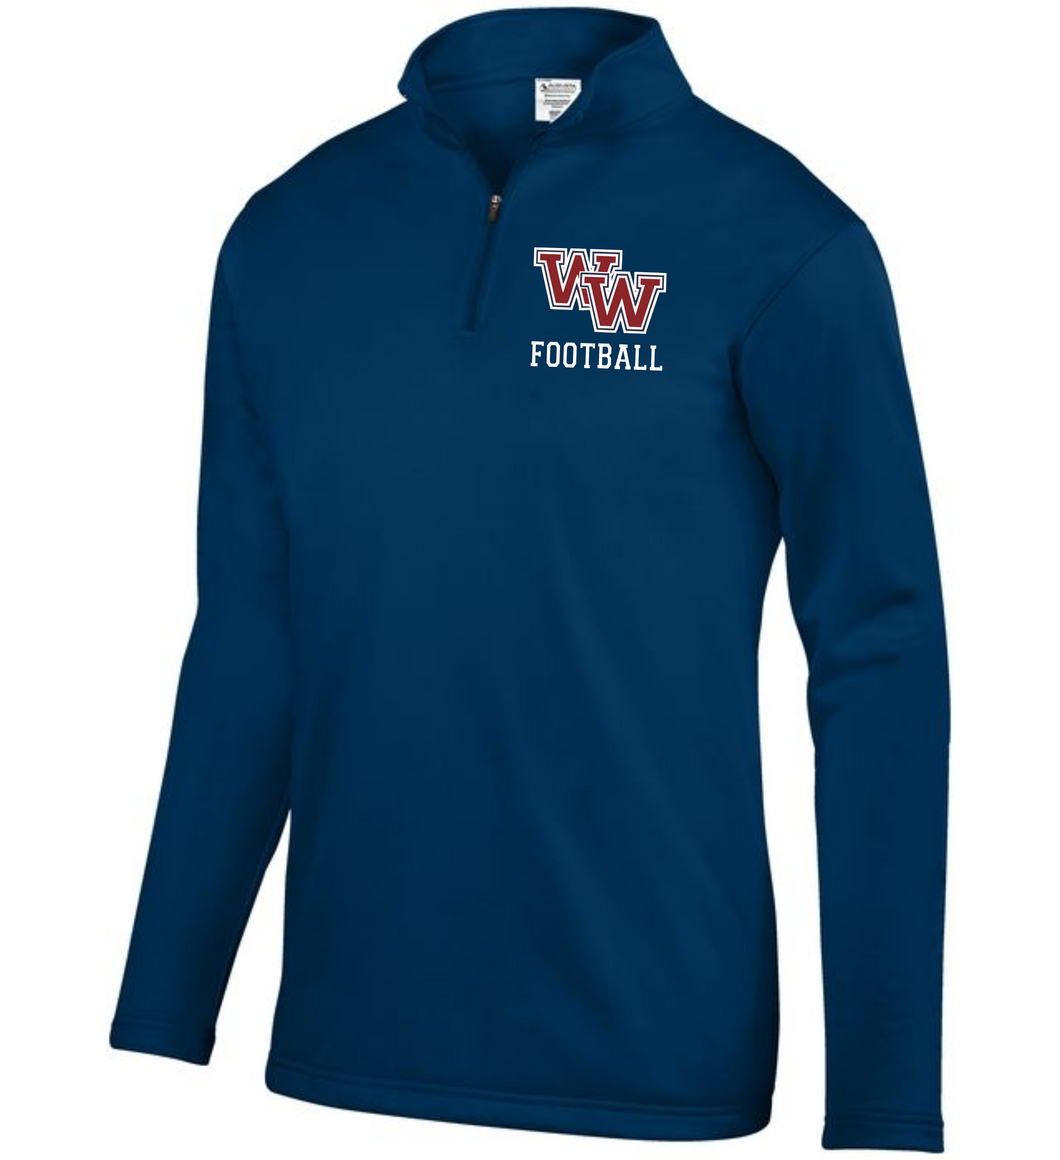 WW-FB-102-2 - Augusta 1/4 Zip Wicking Fleece Pullover -WW Football Logo